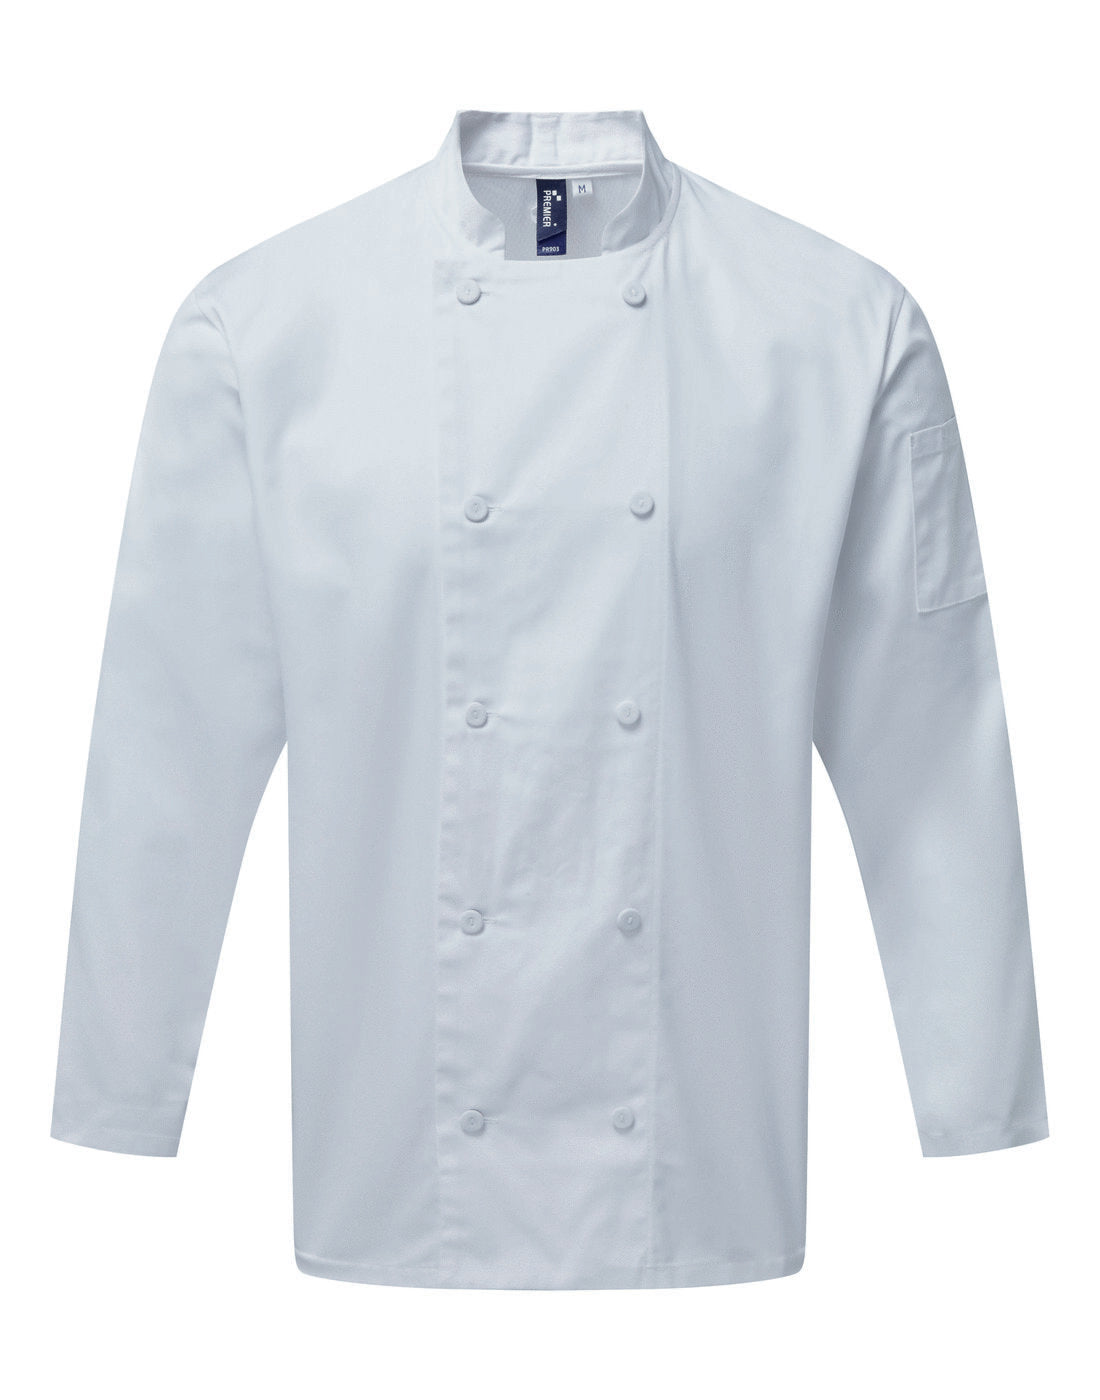 Premier Chef's Long Sleeve Coolchecker® Jacket